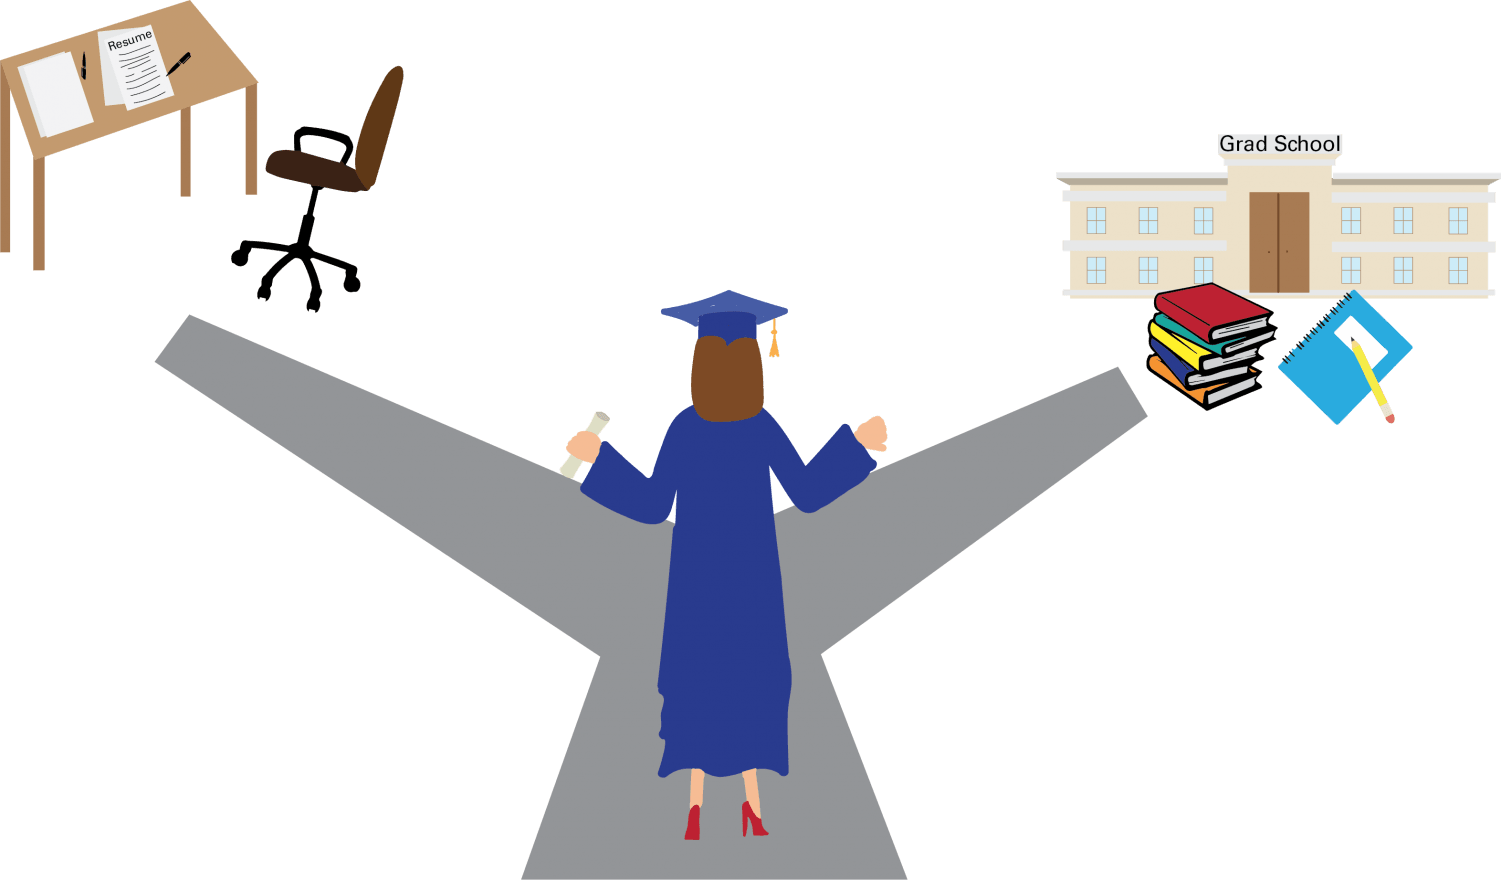 What Is Graduate School?